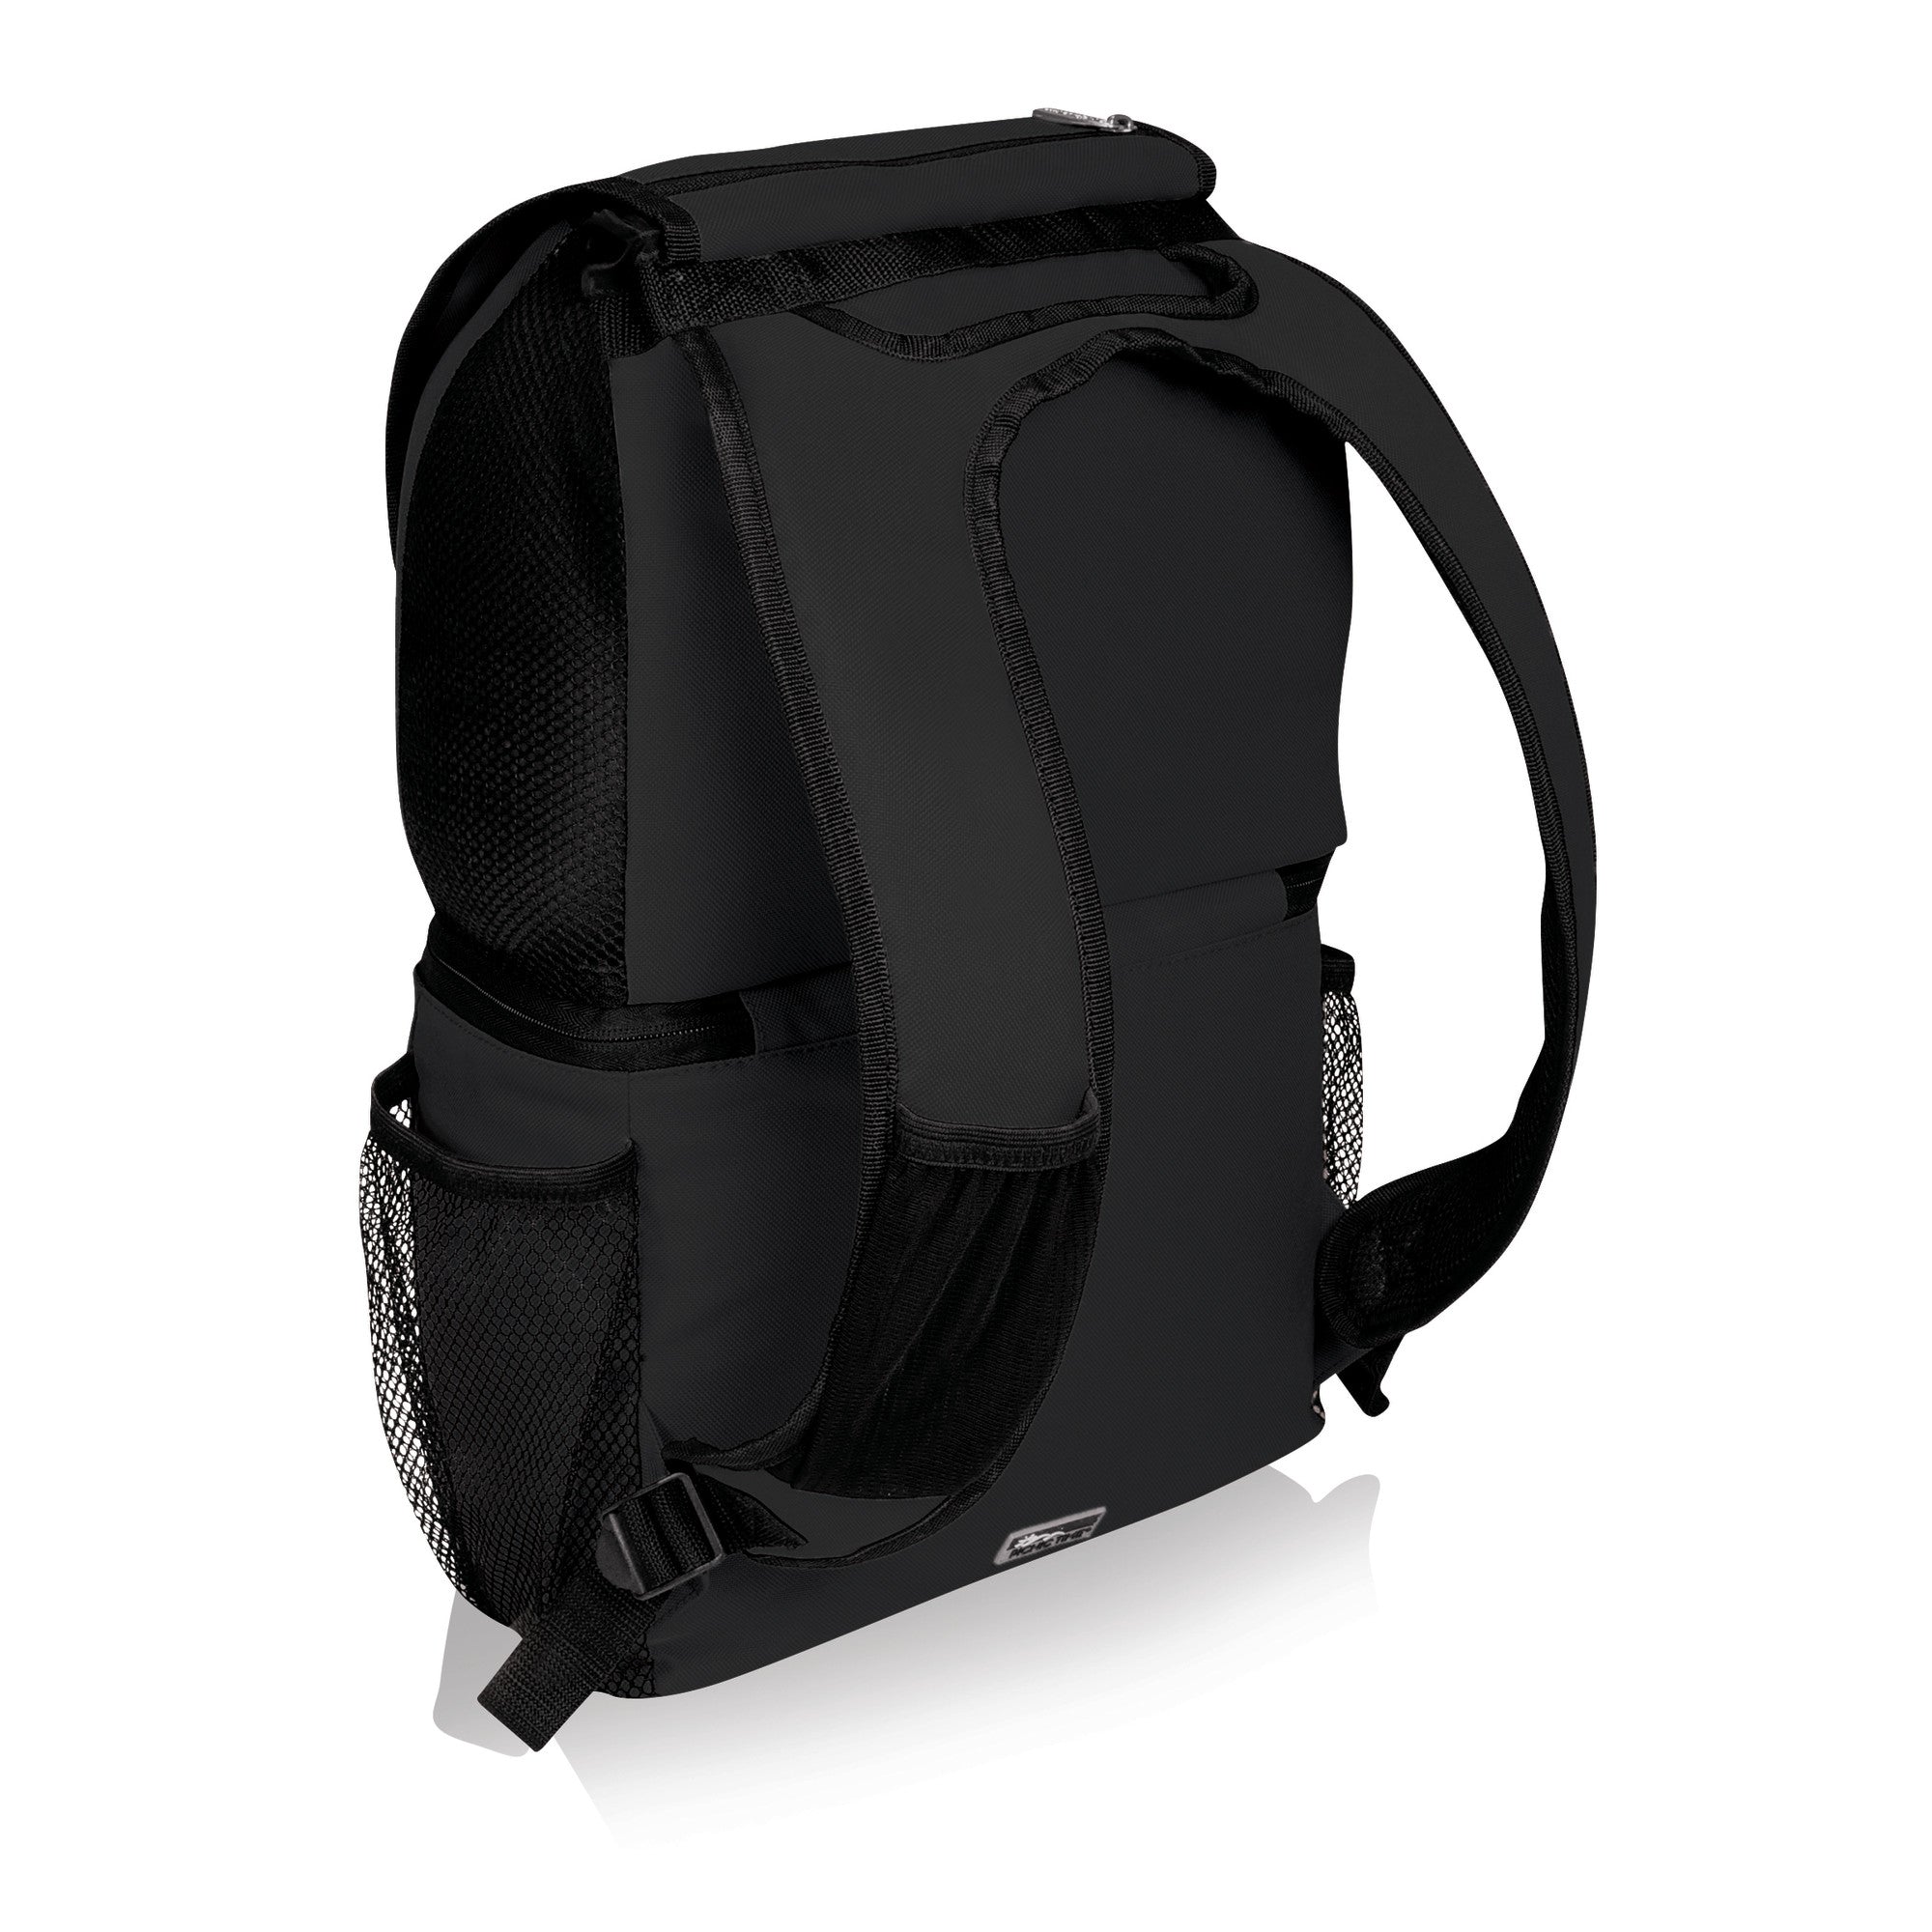 Michigan State Spartans - Zuma Backpack Cooler